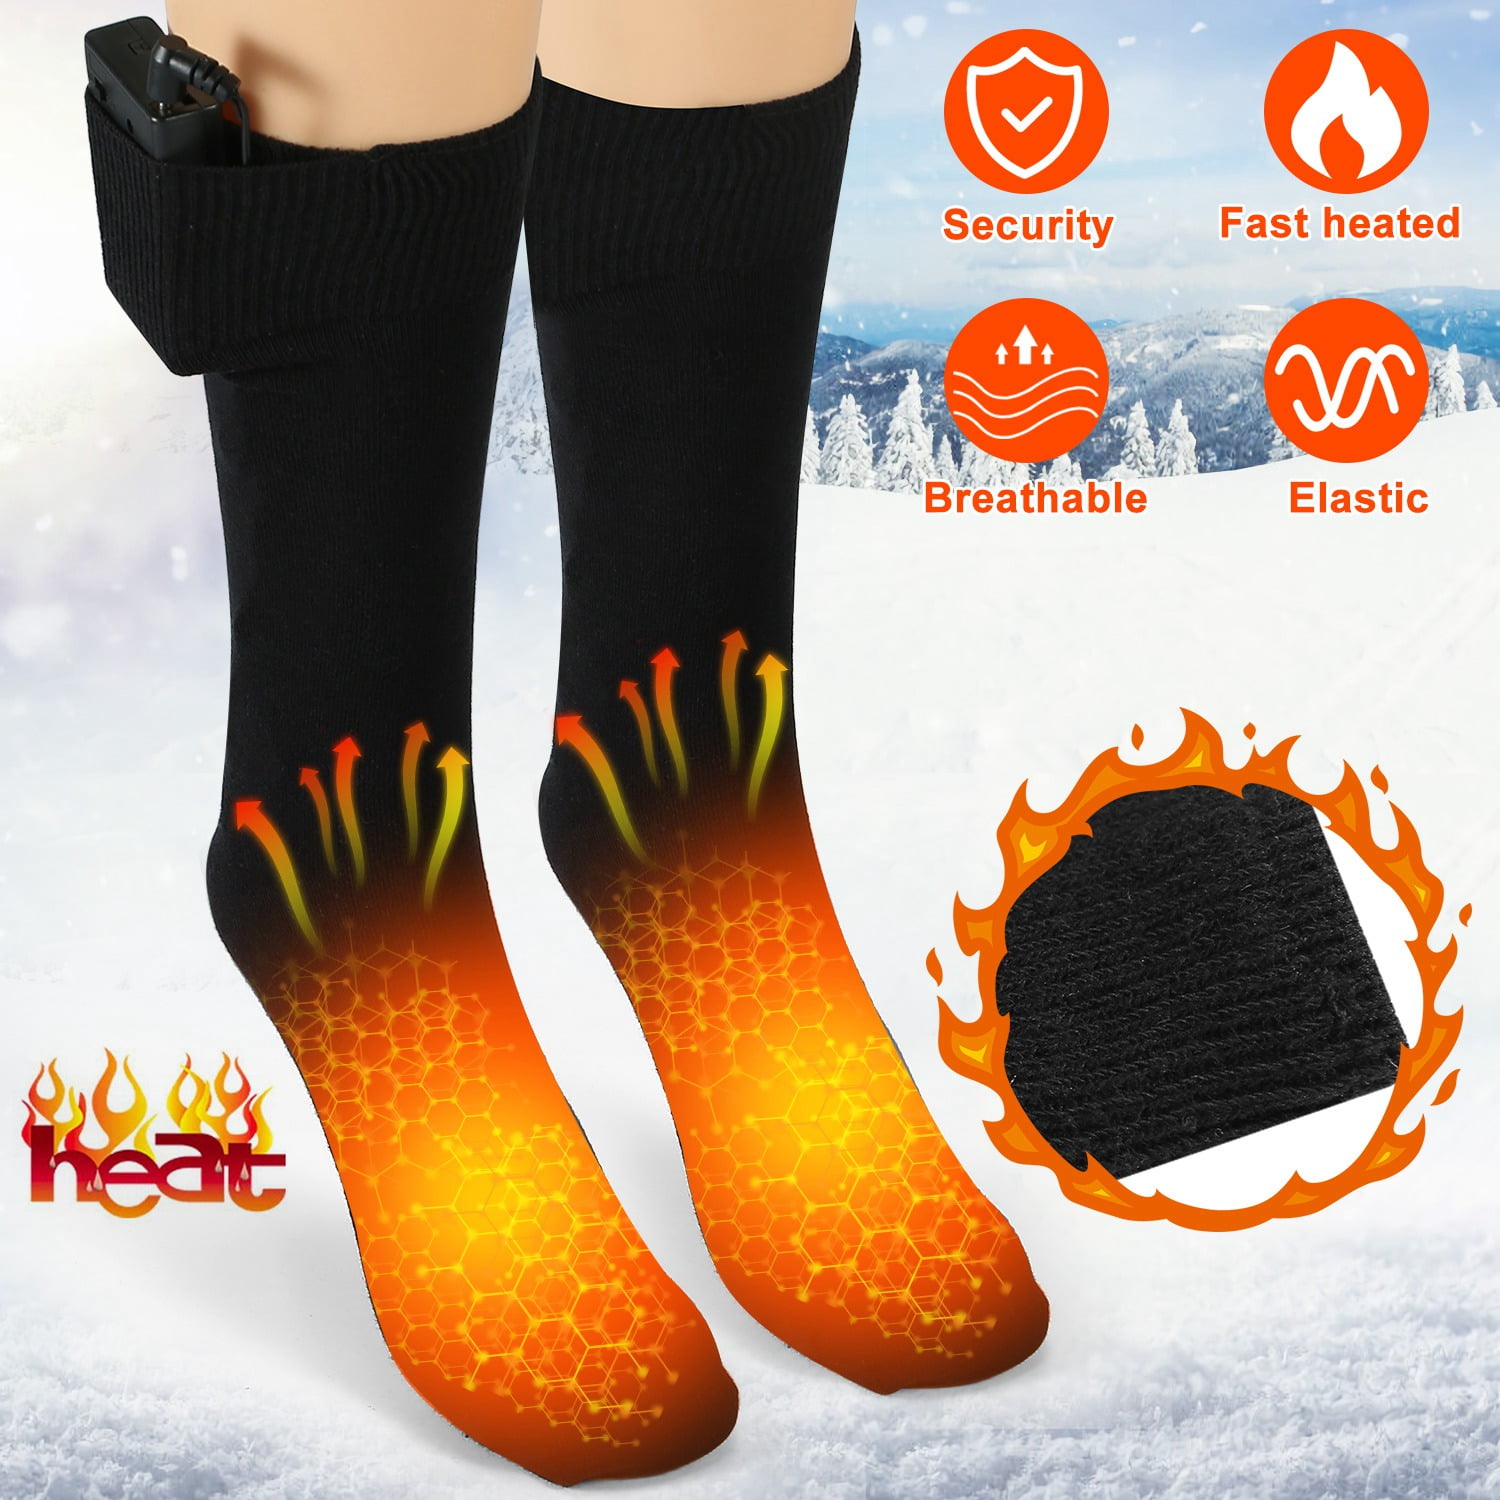 Battery Powered Electric Heated Socks Cold Winter Feet Foot Socks Thermal Warmer 